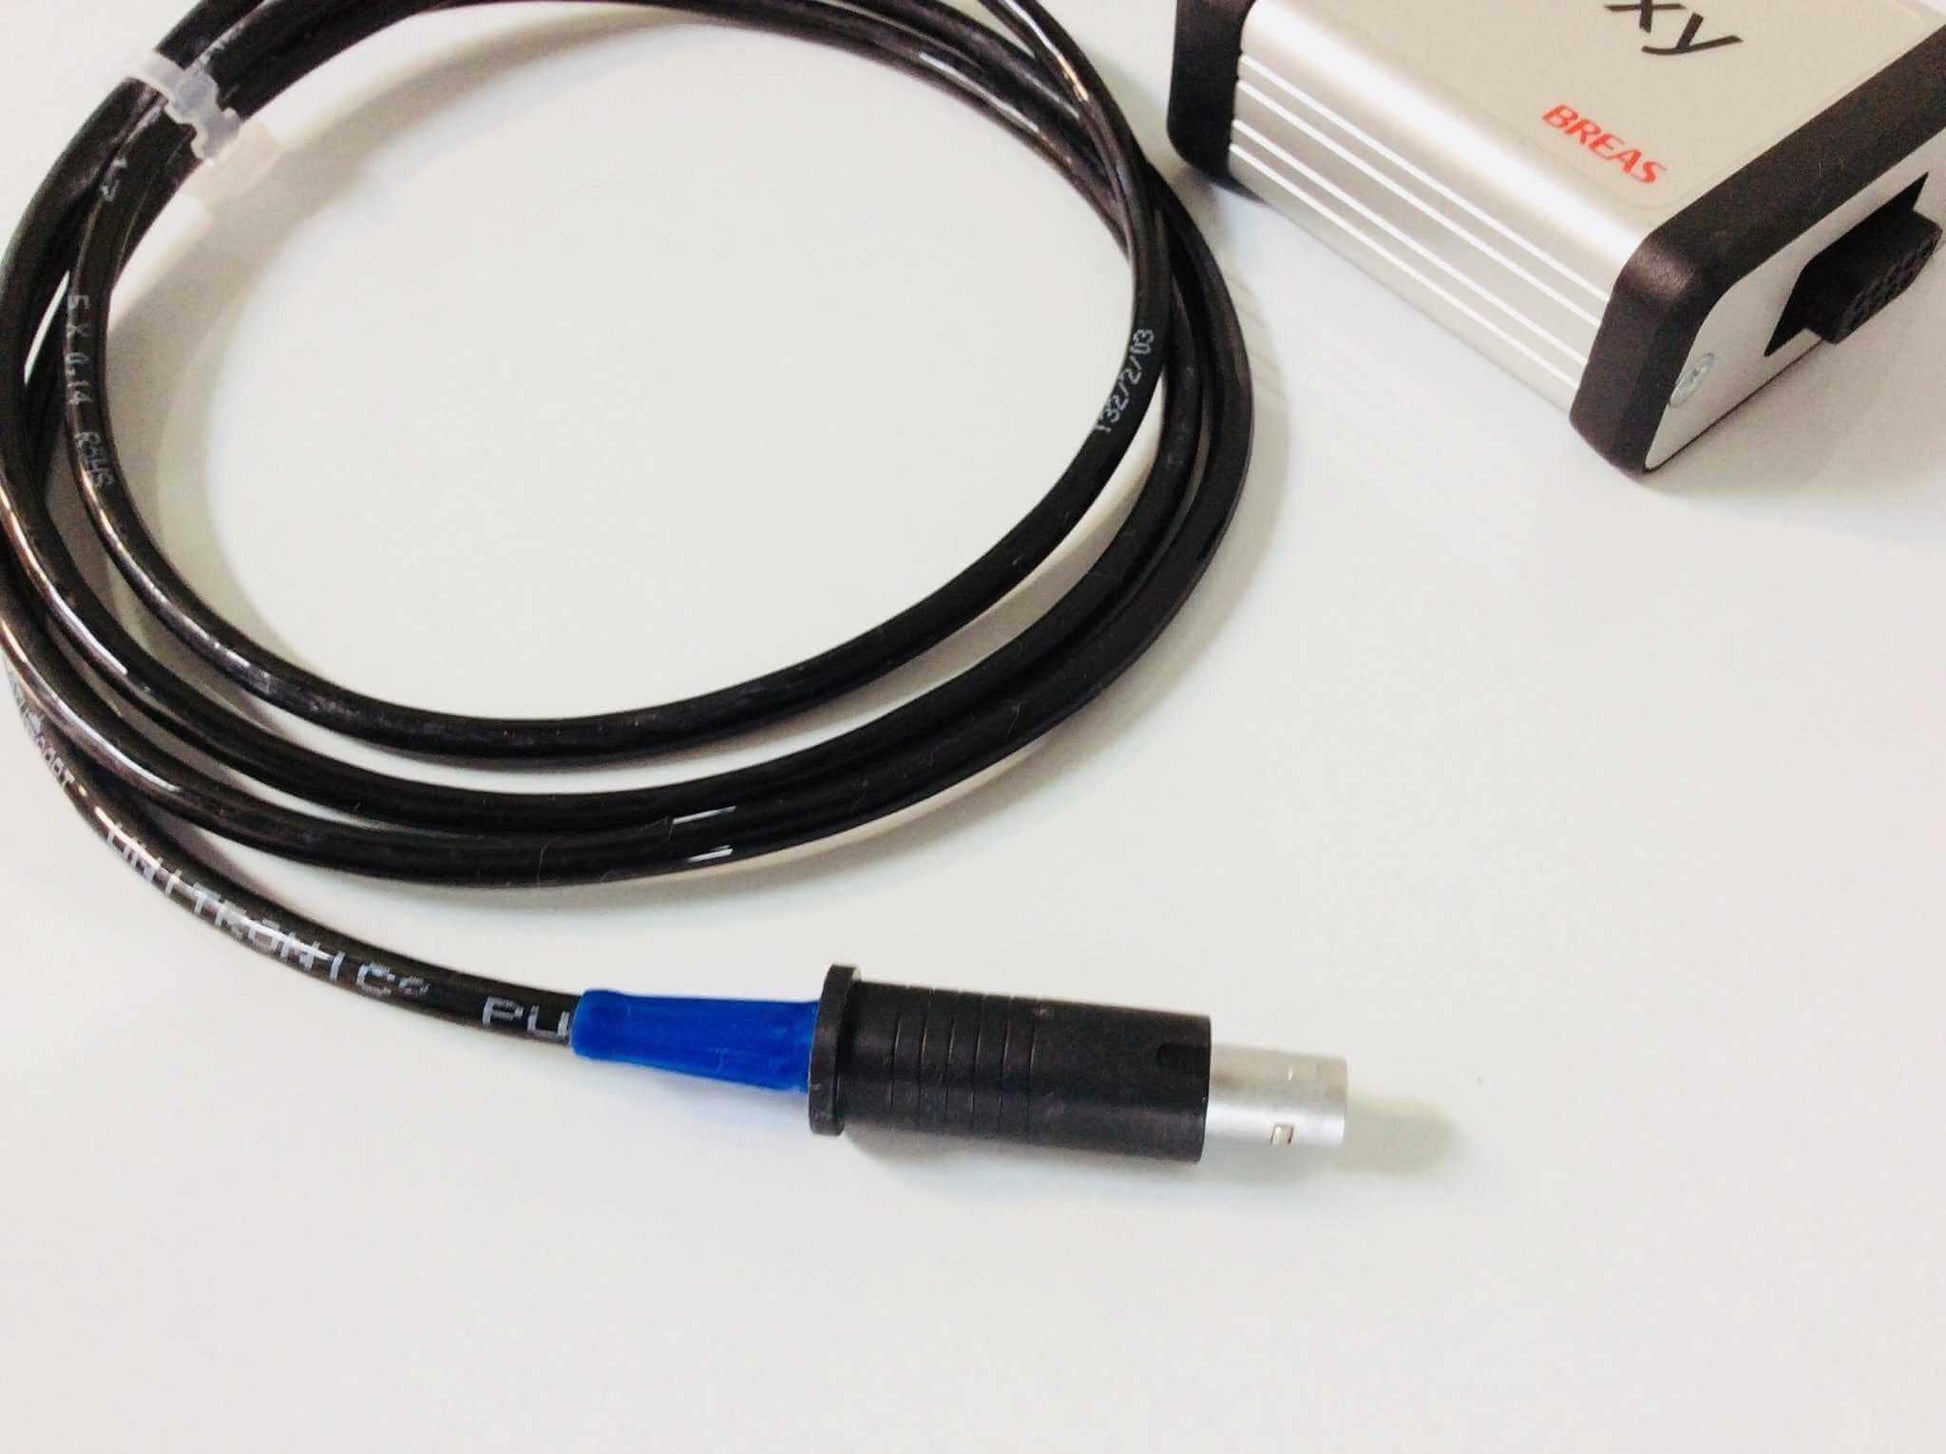 USED Breas HDM iOxy Pulse Oximeter Sensor with Nonin Purelight SpO2 Flex Finger Probe Kit 005067 004874 002063 Warranty FREE Shipping - MBR Medicals